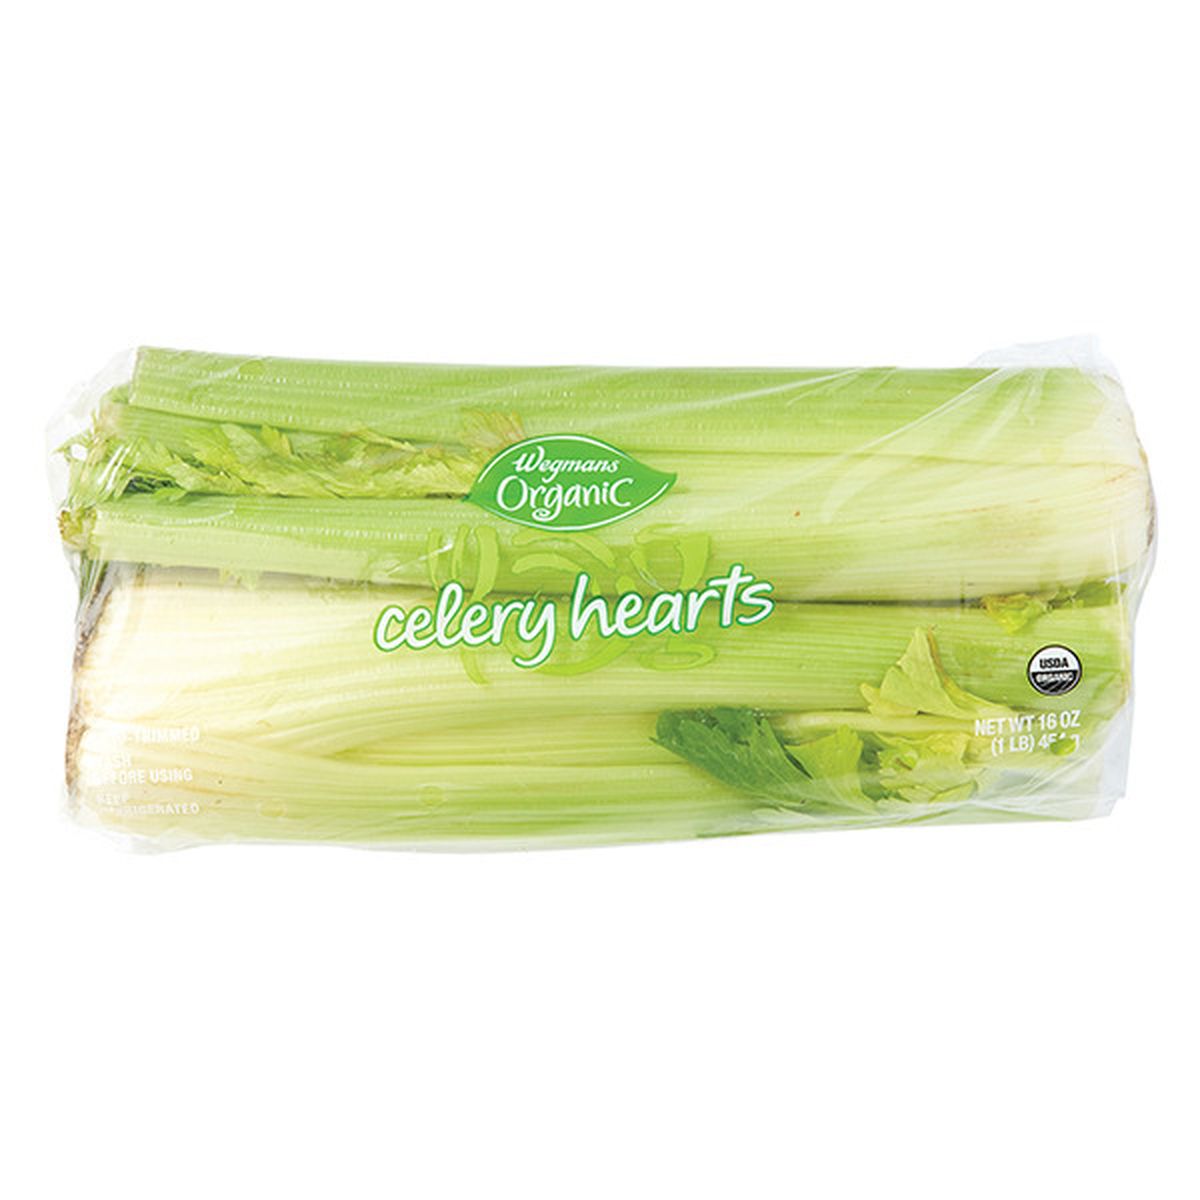 Calories in Wegmans Organic Celery Hearts